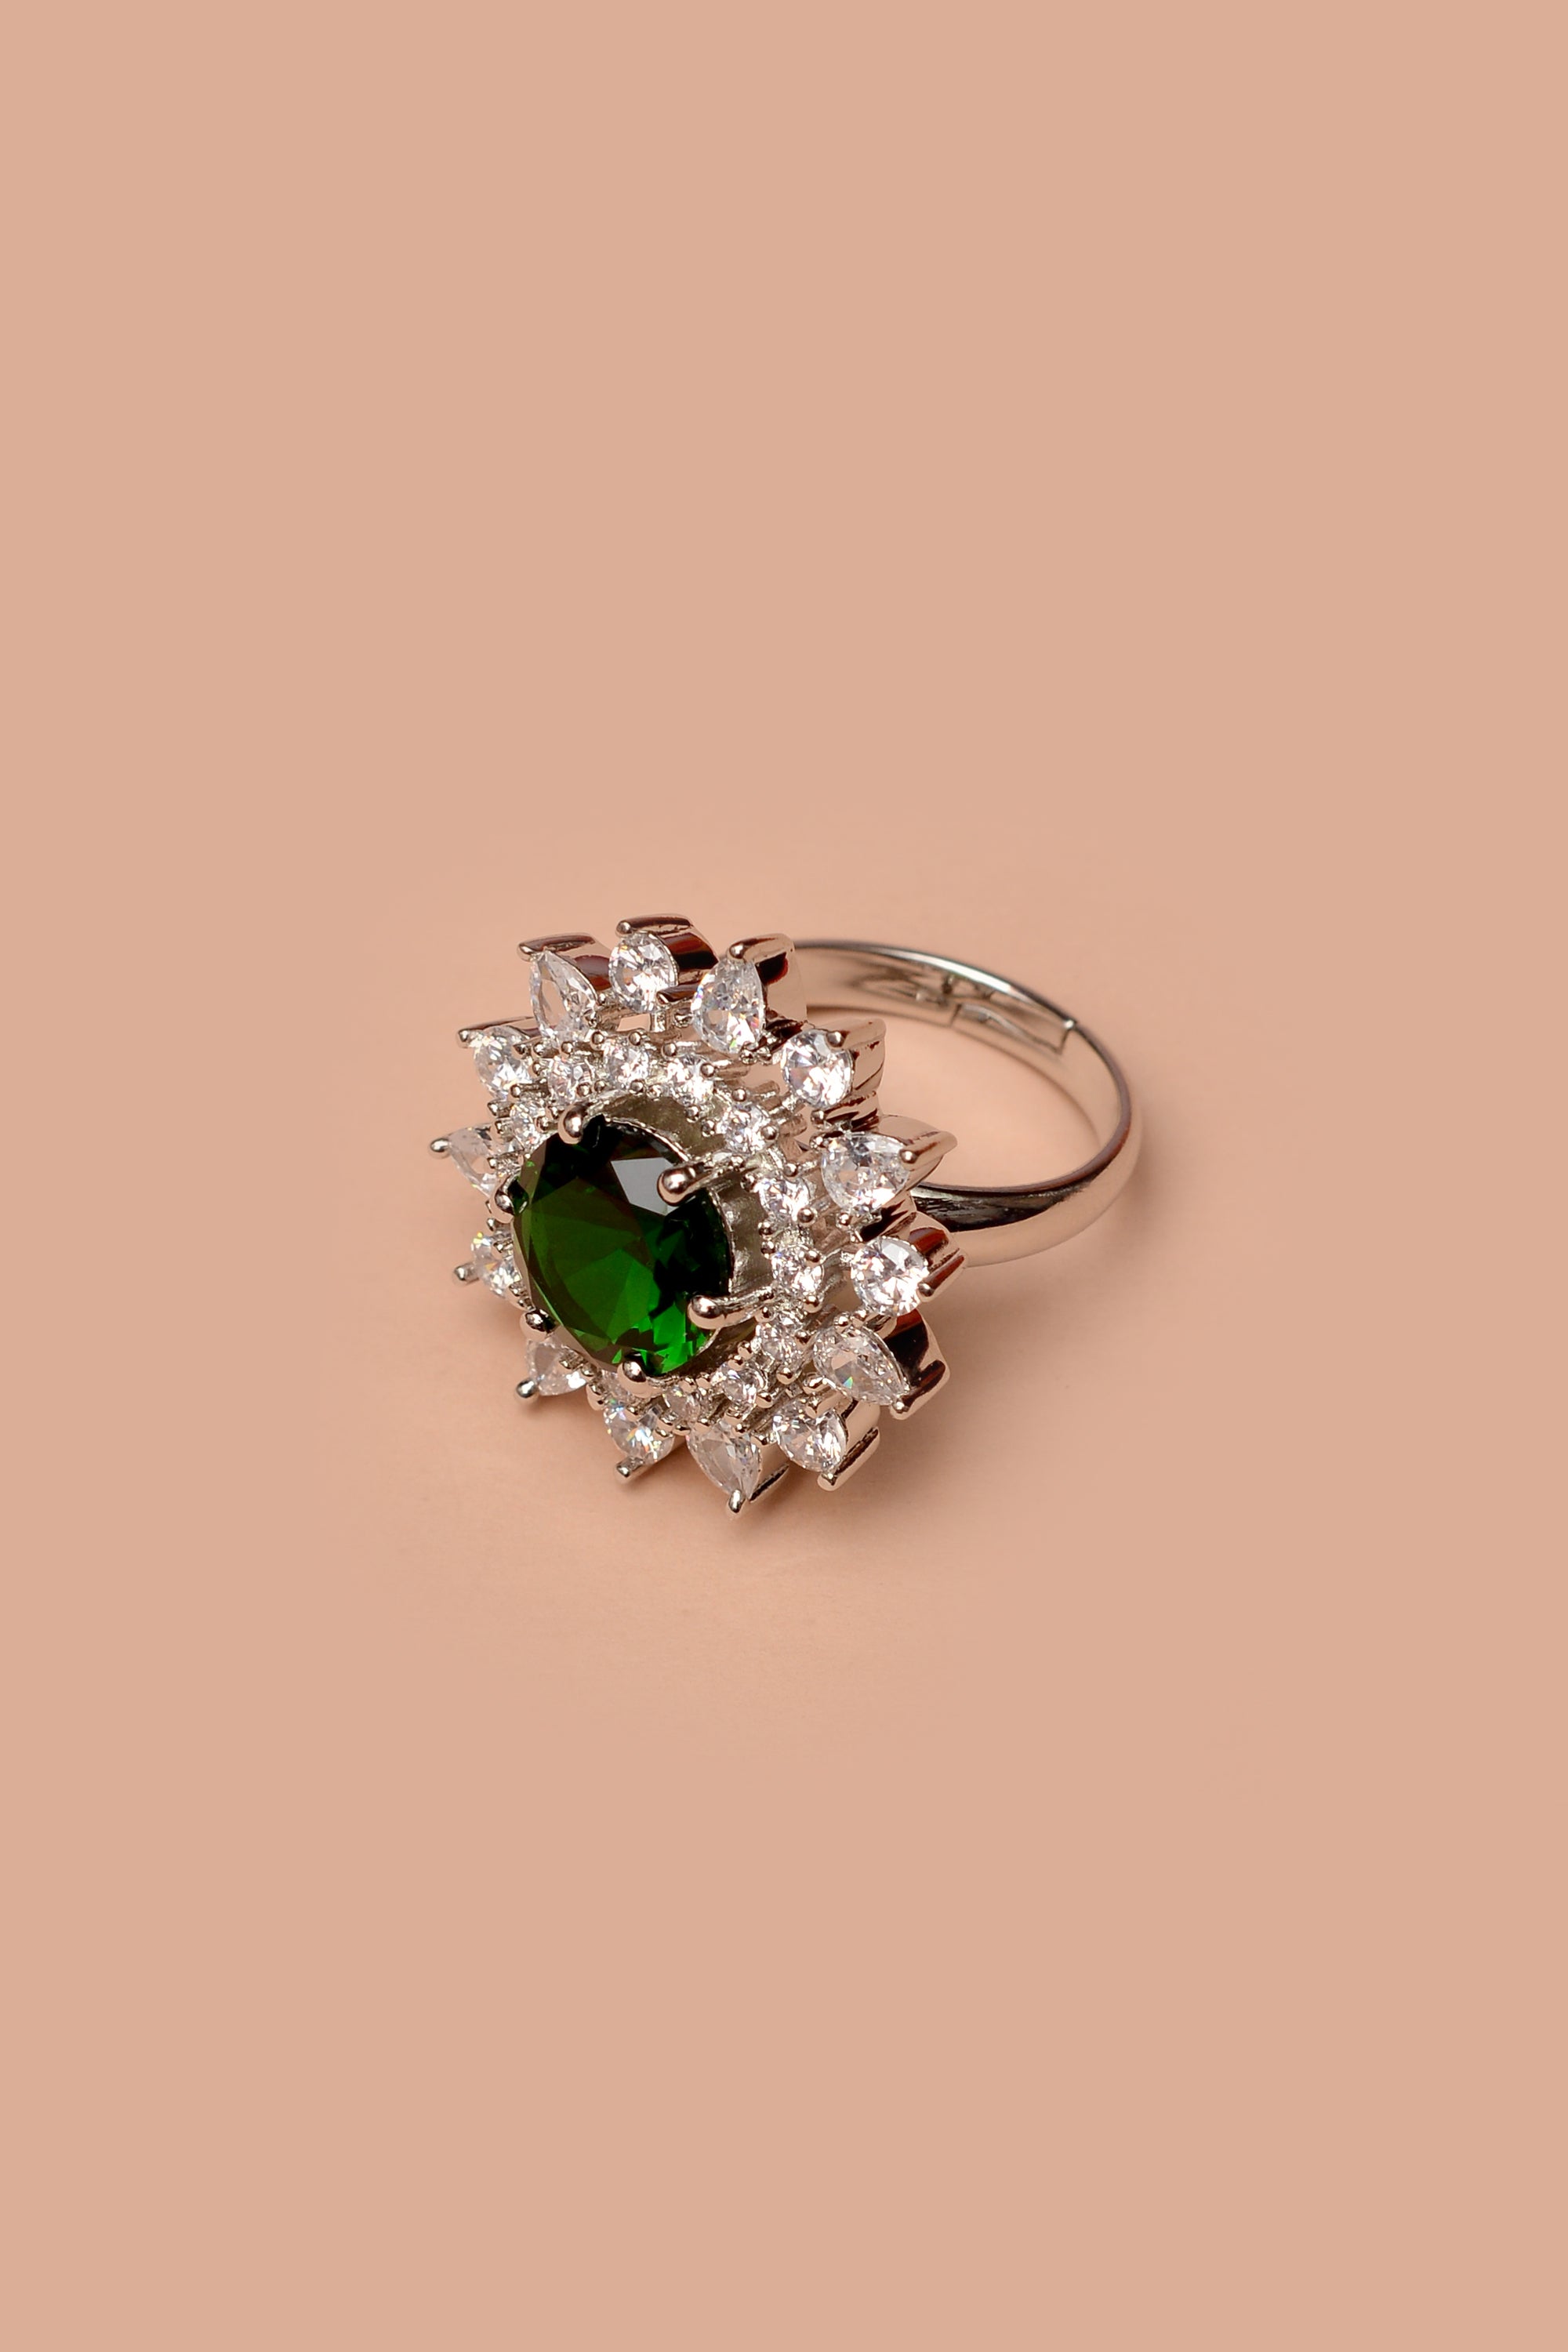 Engagement & Wedding Green Ring